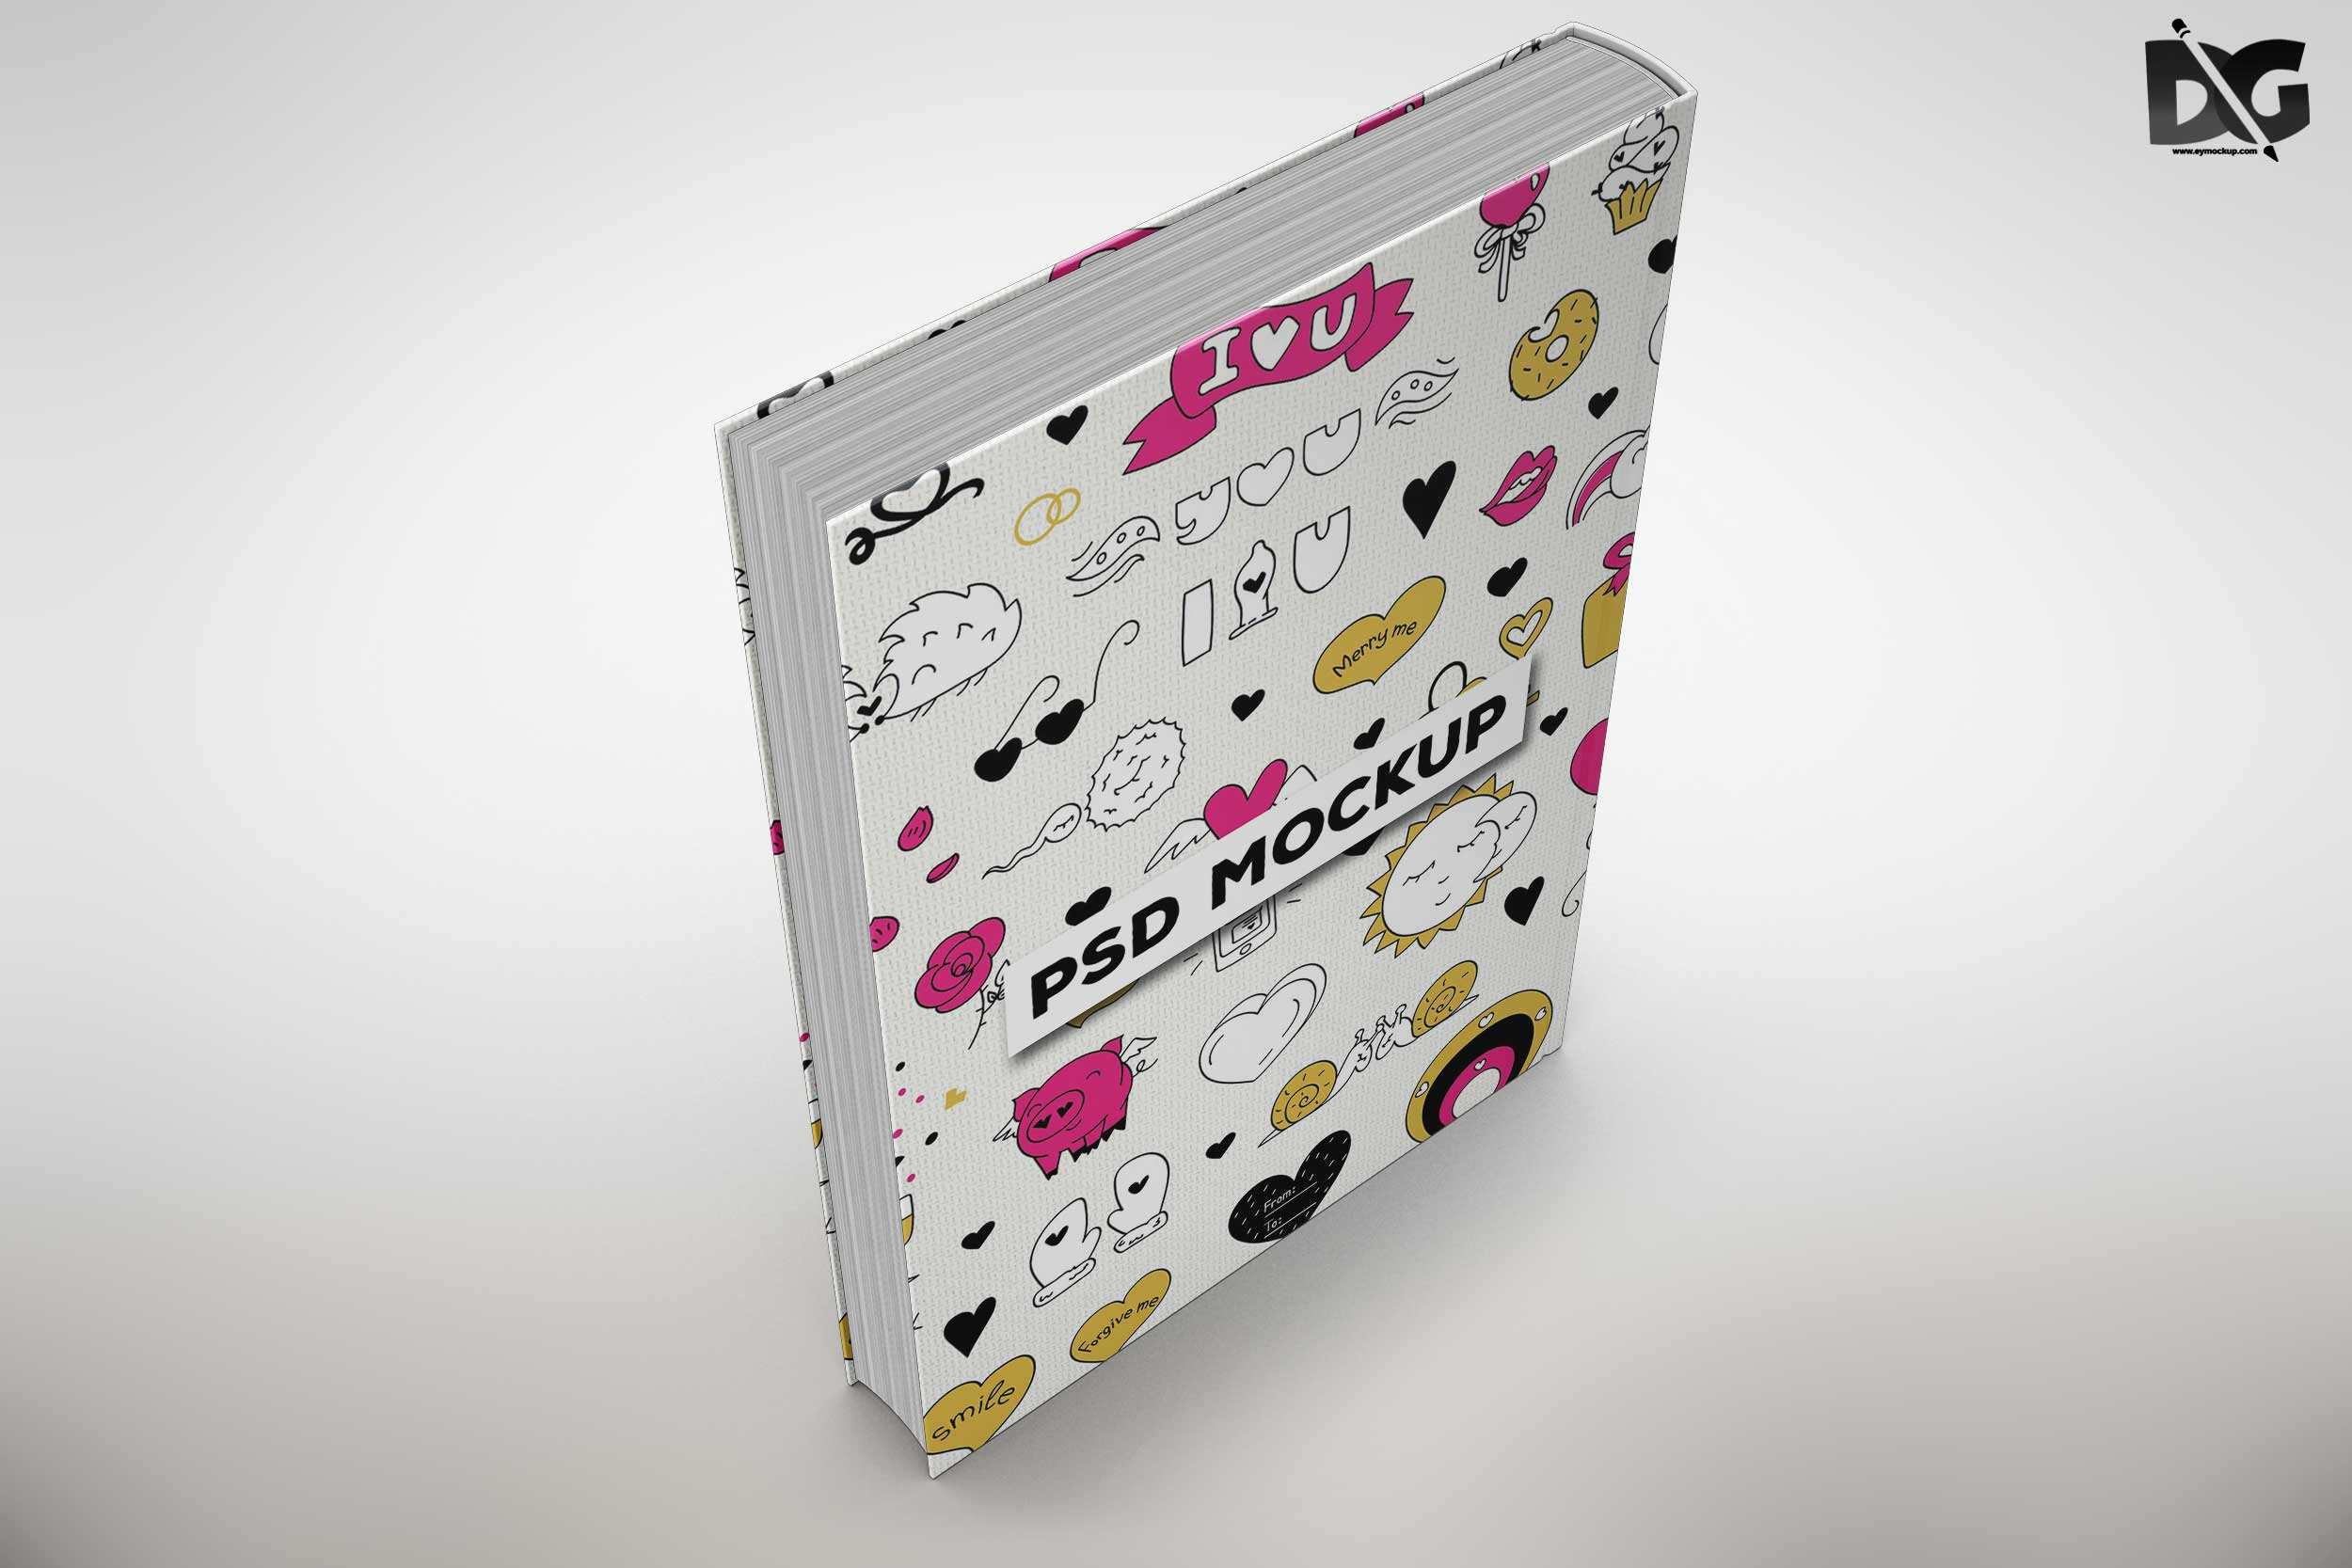 Download Free eBook Cover Mockup For eBook | Free PSD Freebies Mockup